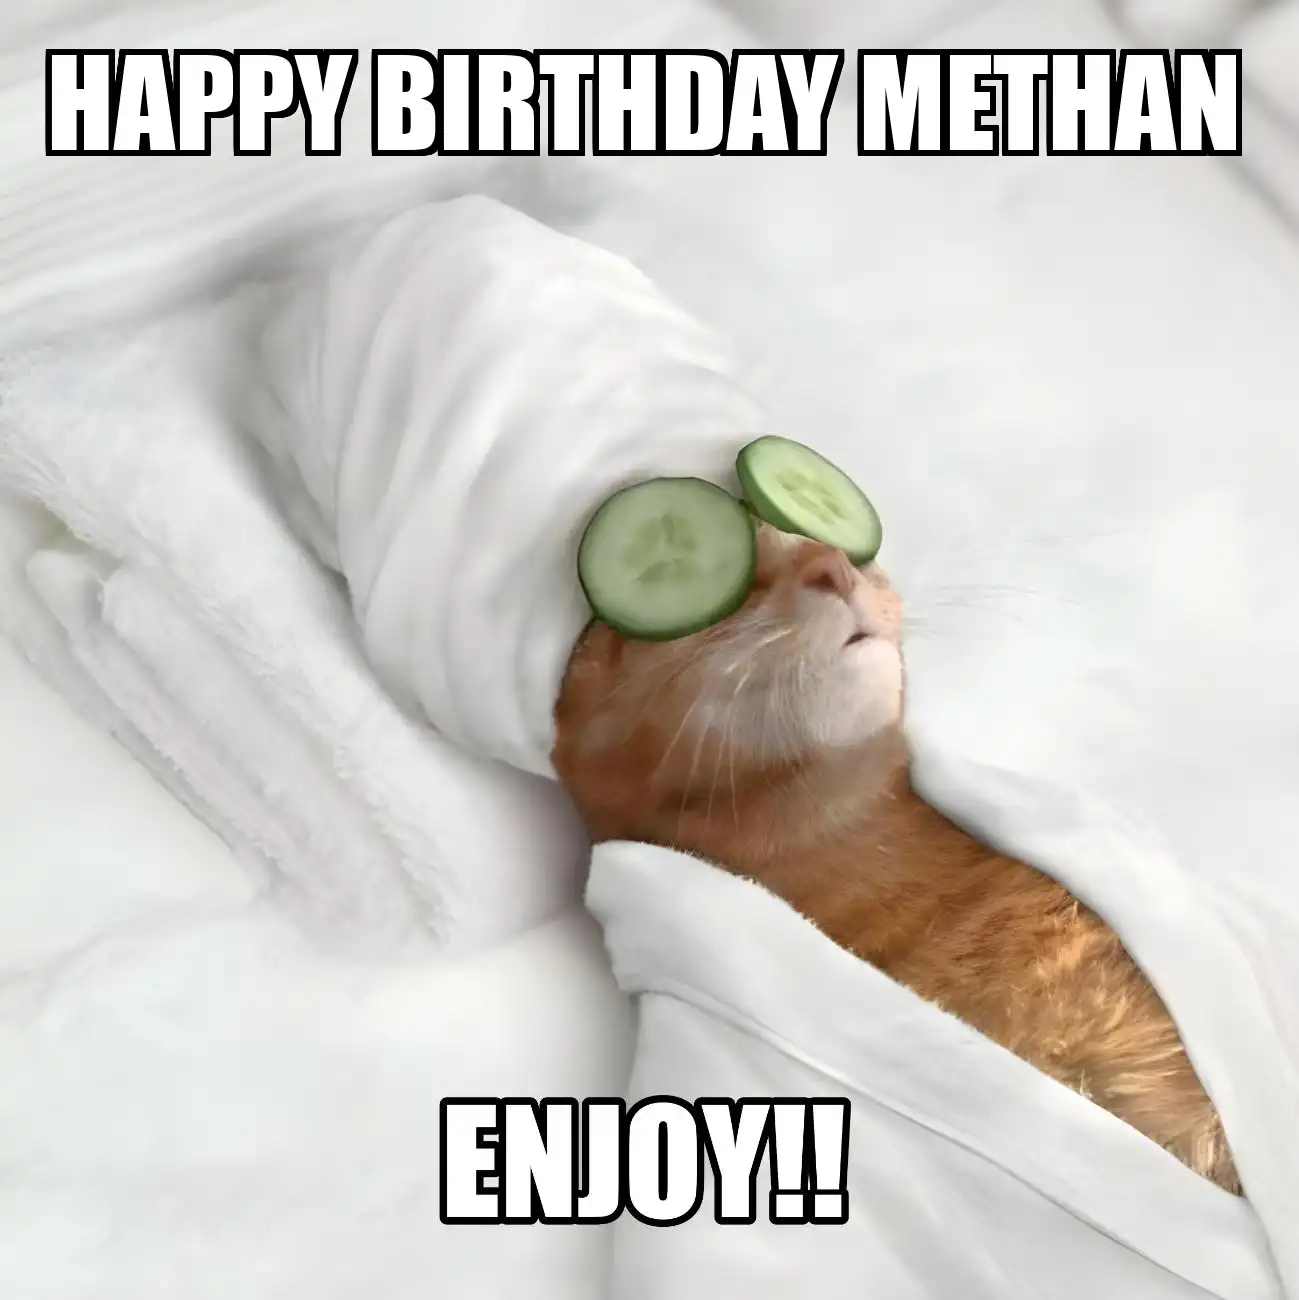 Happy Birthday Methan Enjoy Cat Meme